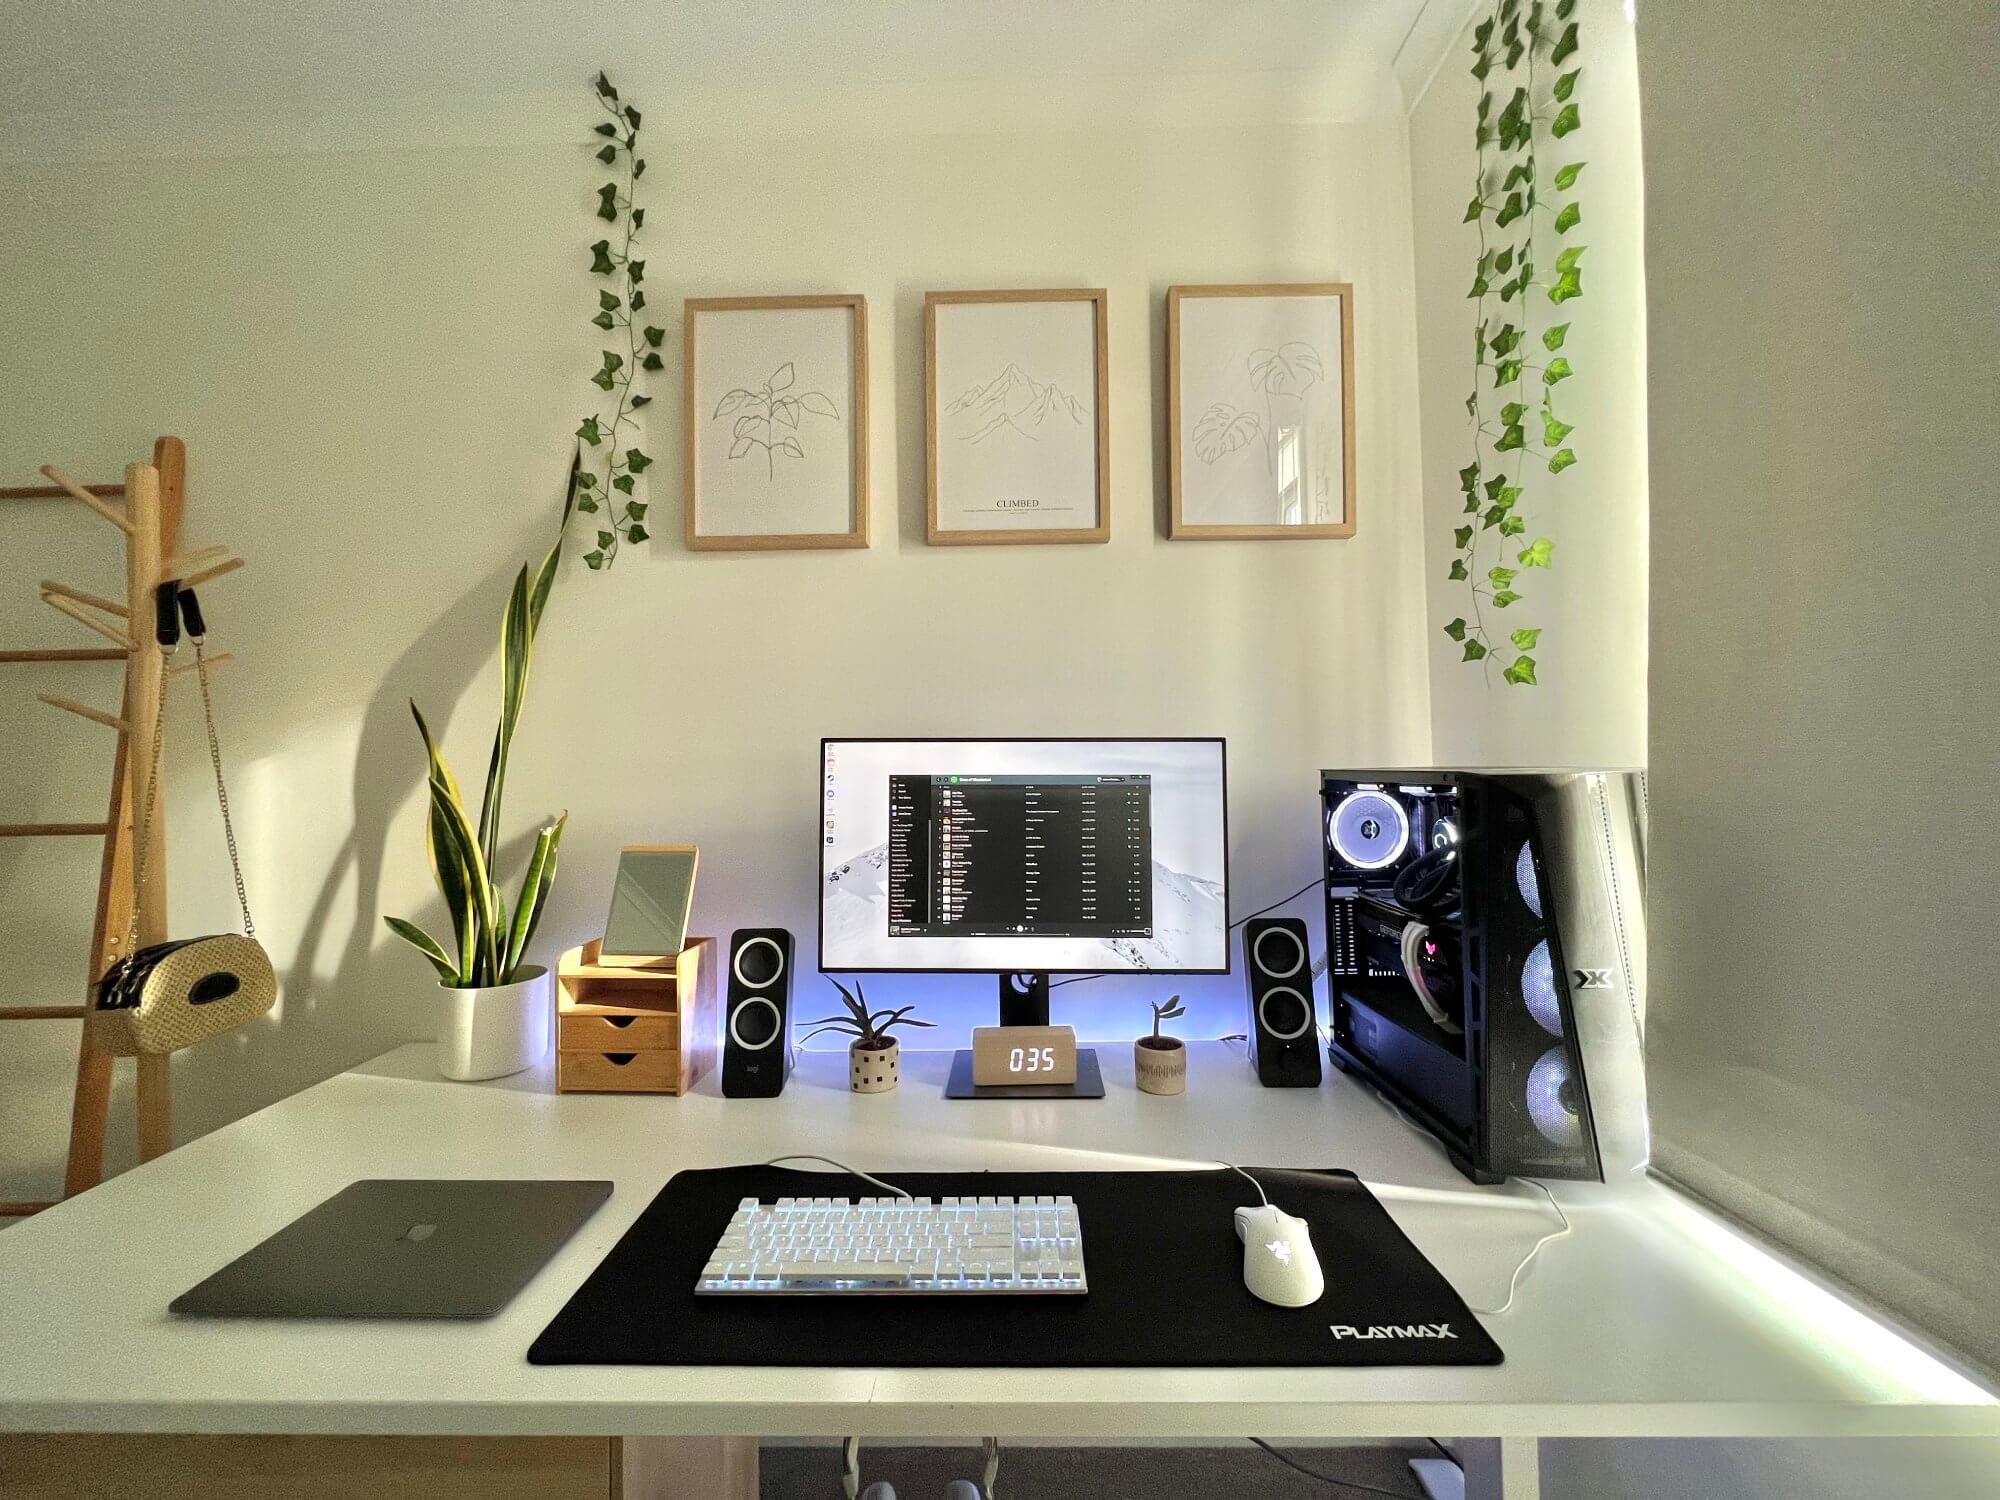 A minimalist desk setup